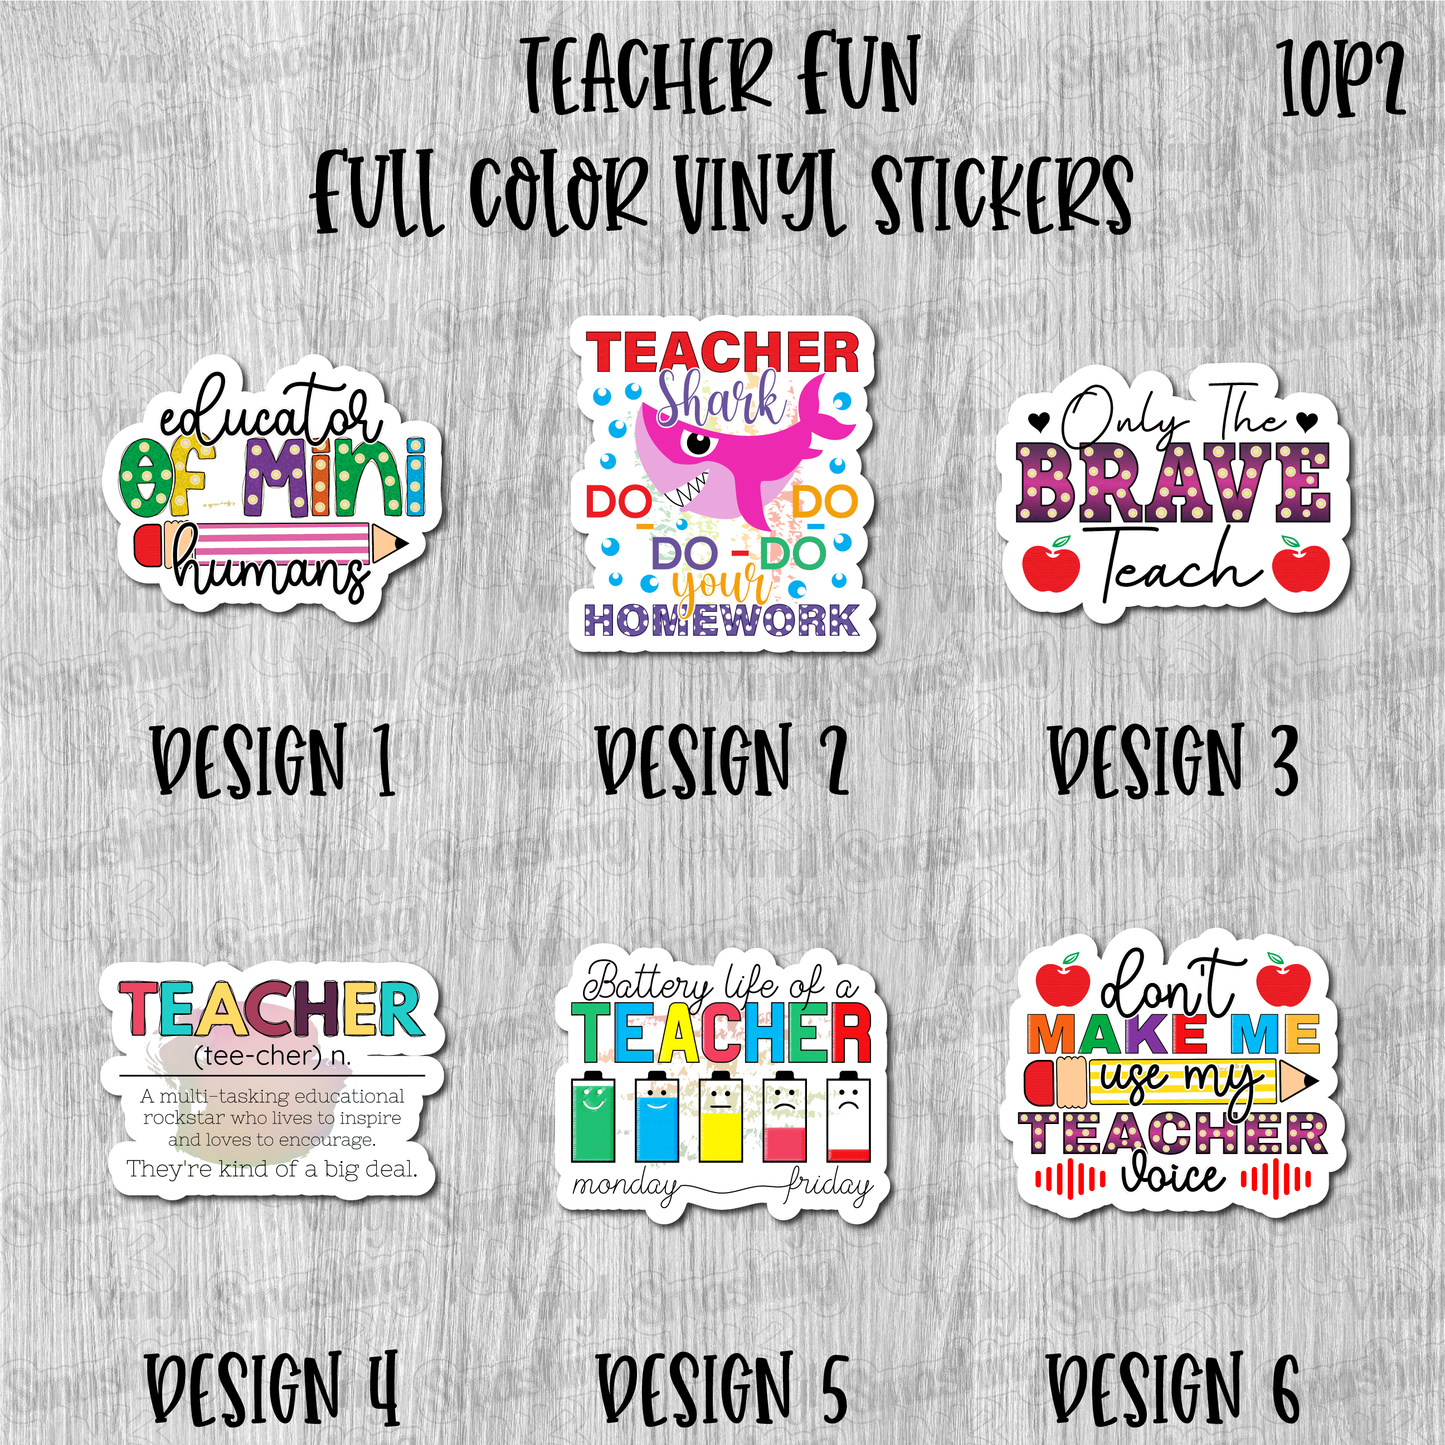 Teacher Fun - Full Color Vinyl Stickers (SHIPS IN 3-7 BUS DAYS)